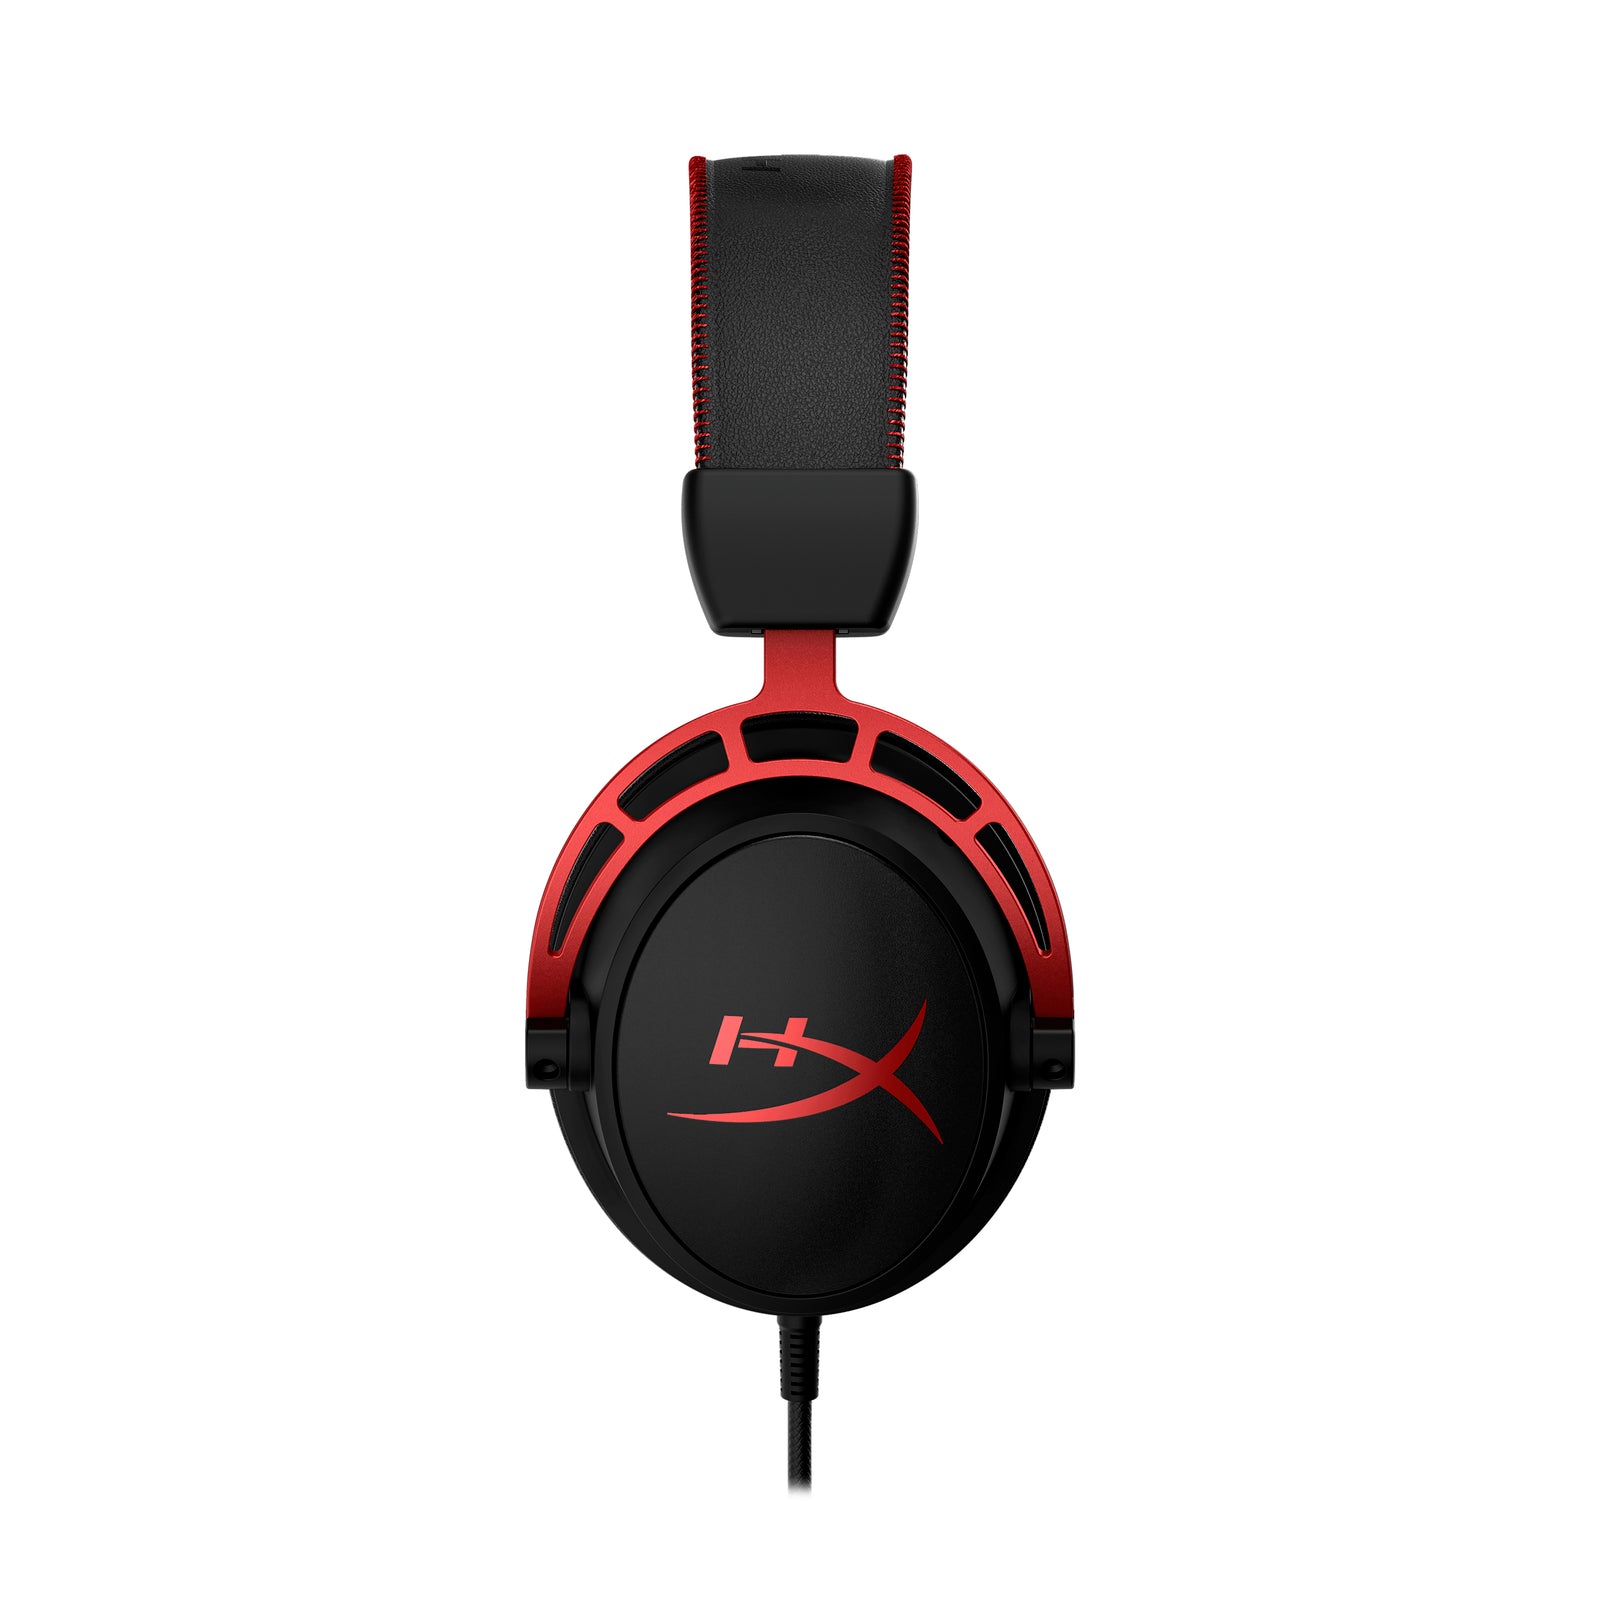 HYPERX Cloud III Wireless Gaming Headset - Black & Red